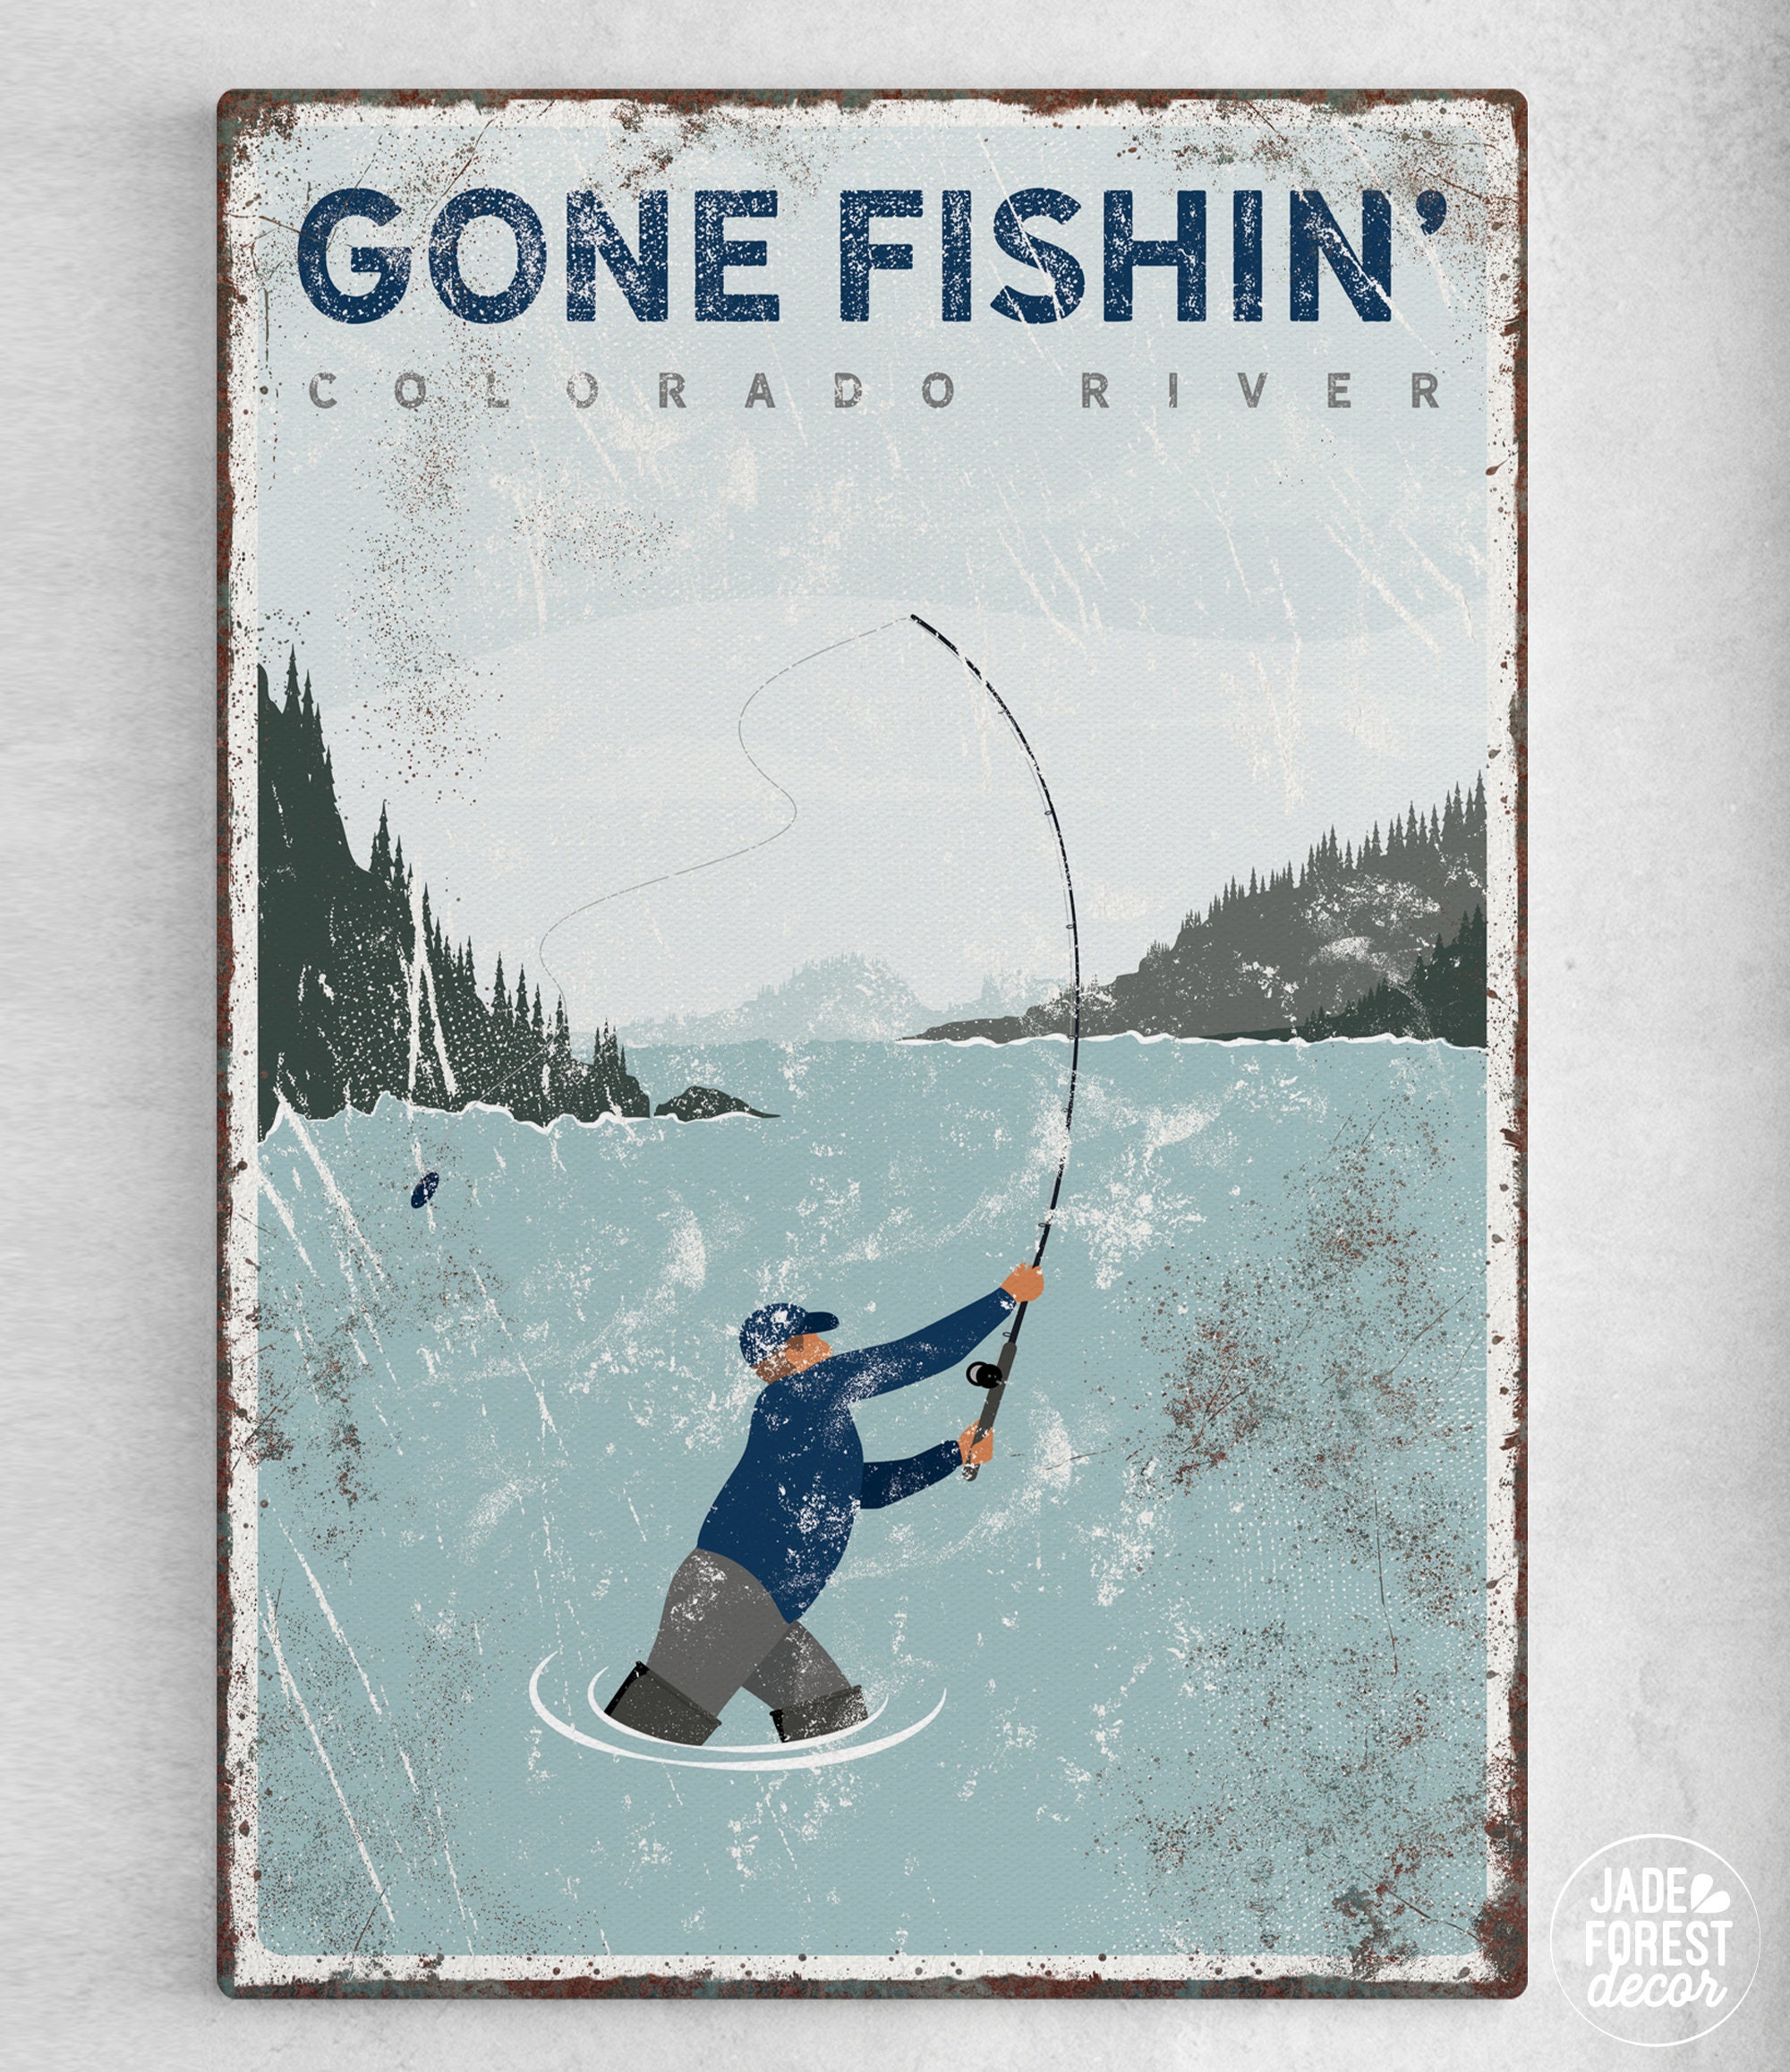 Gone fishing Colorado River poster > custom vintage fly fishing